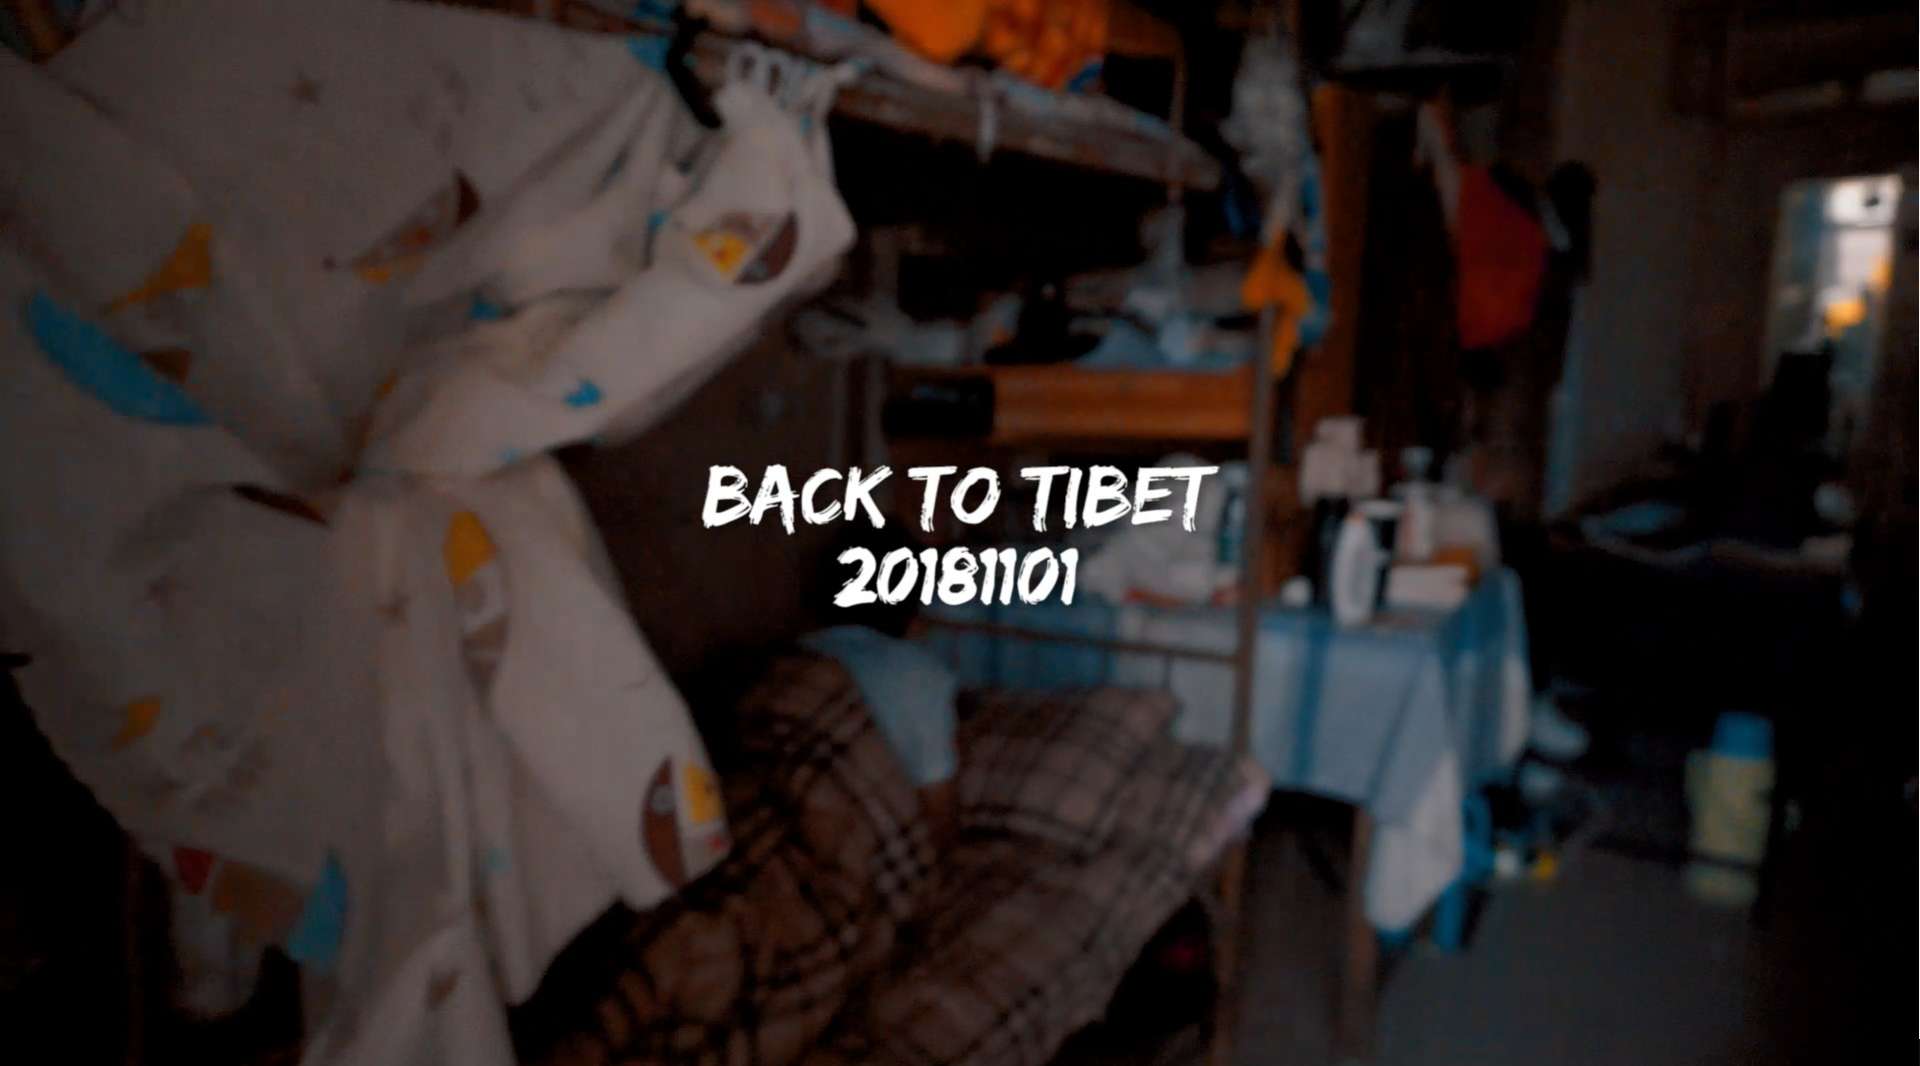 Back to tibet 回到西藏